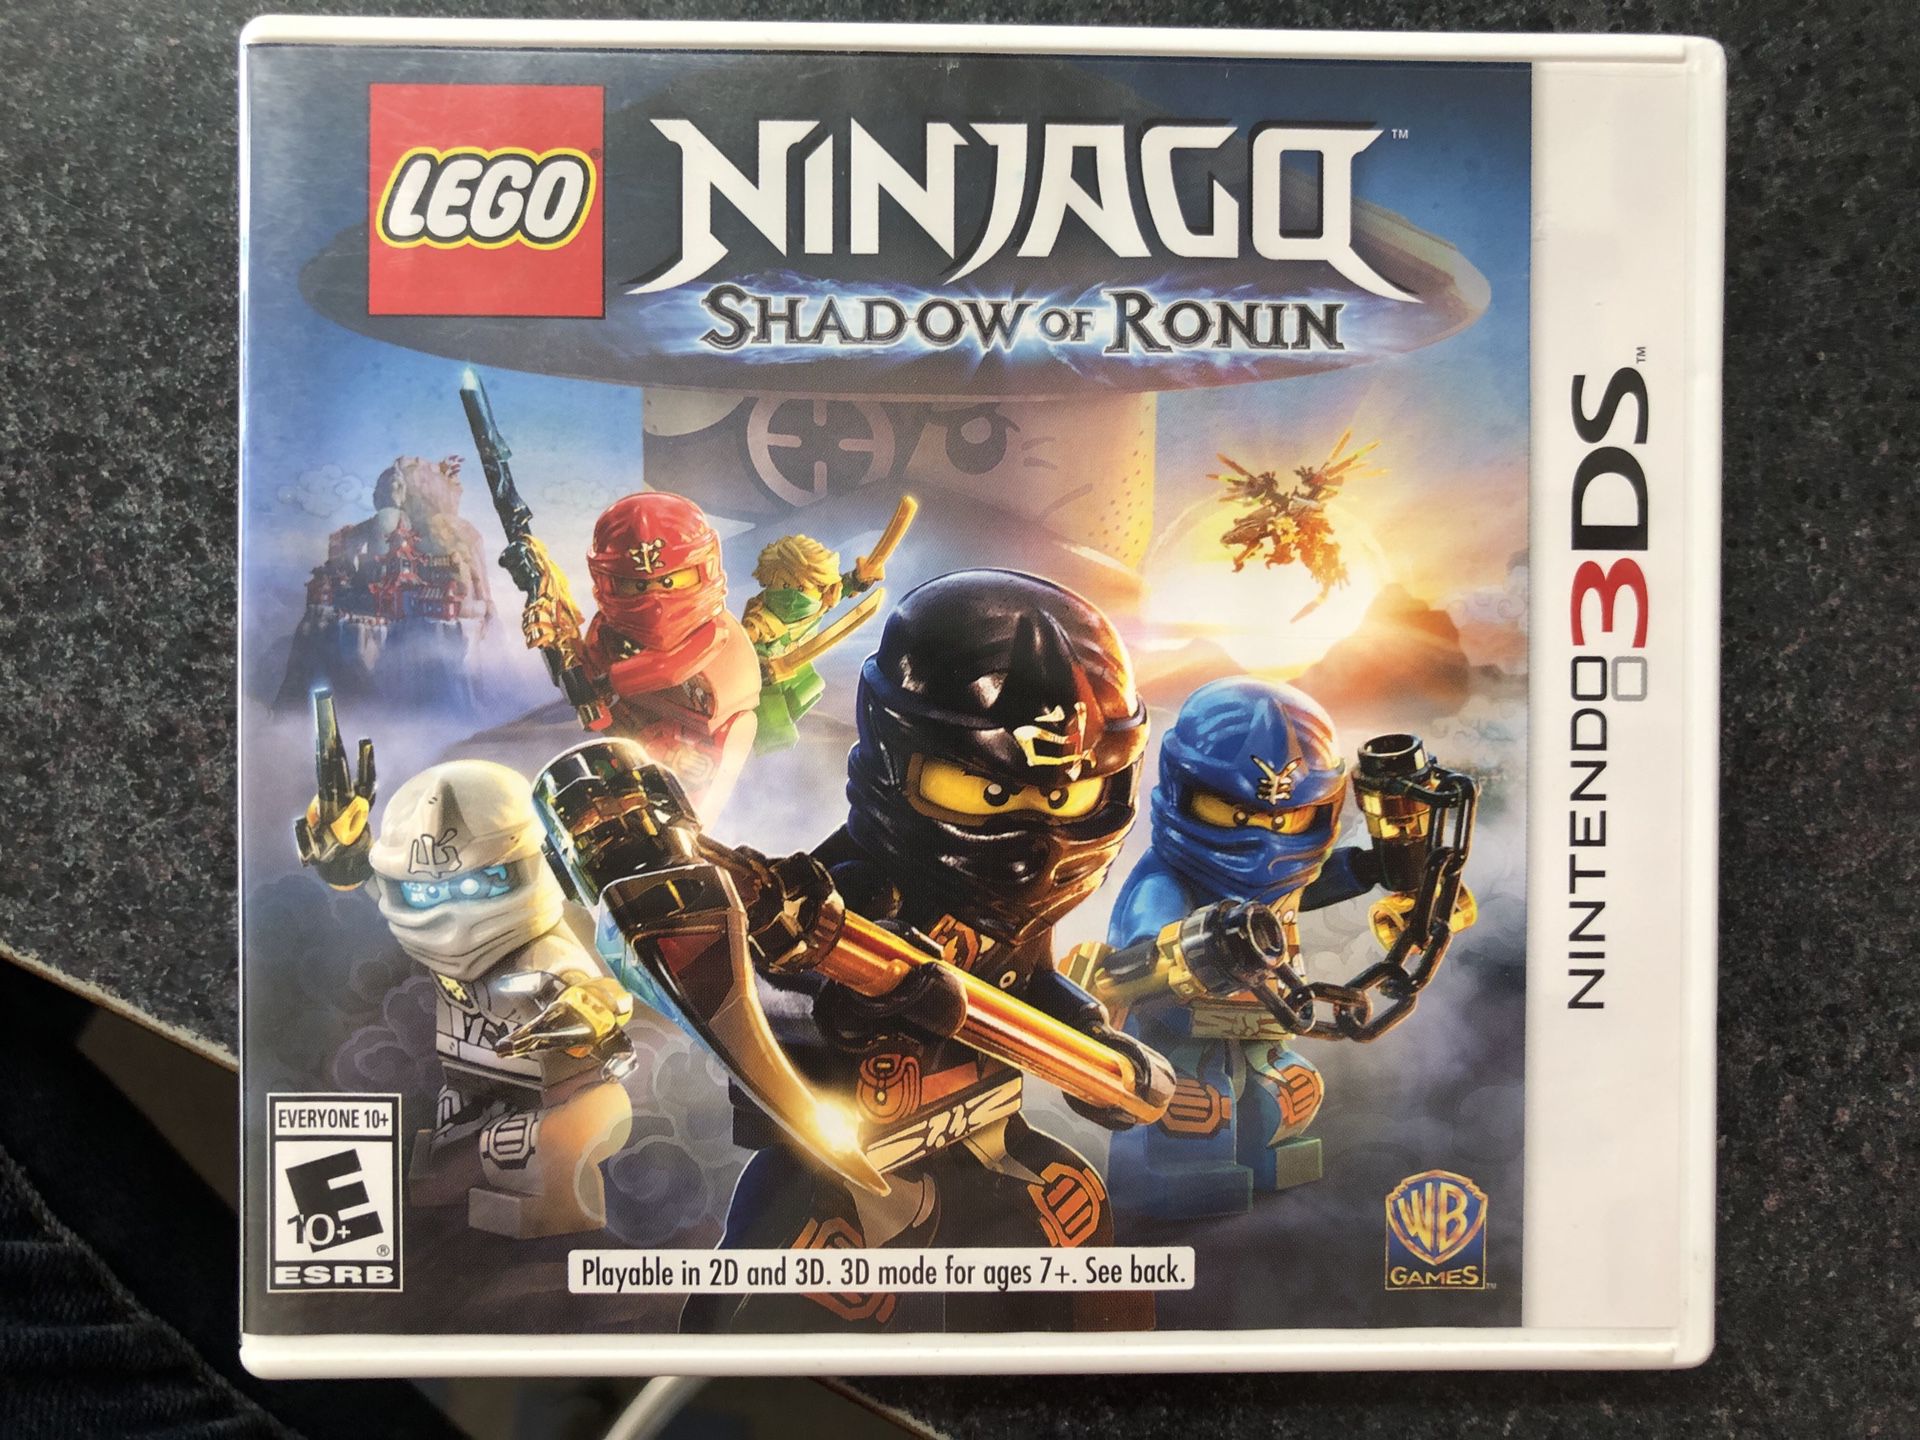 LEGO Ninjago Shadow Of Ronin game for Nintendo 3Ds